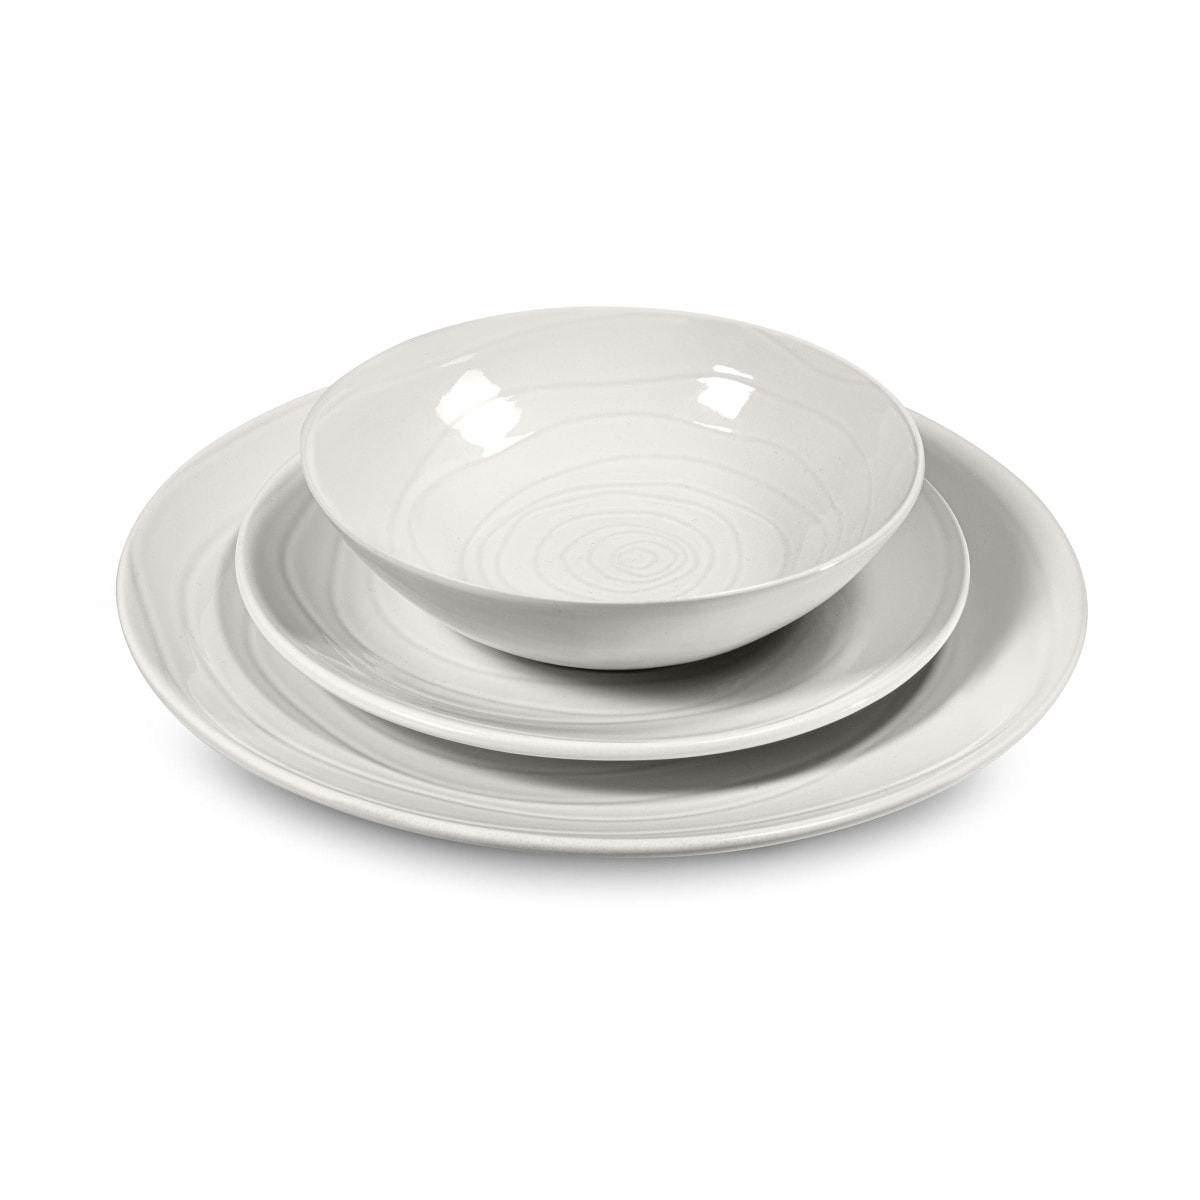 Vibe Blanc - 6 assiettes plates